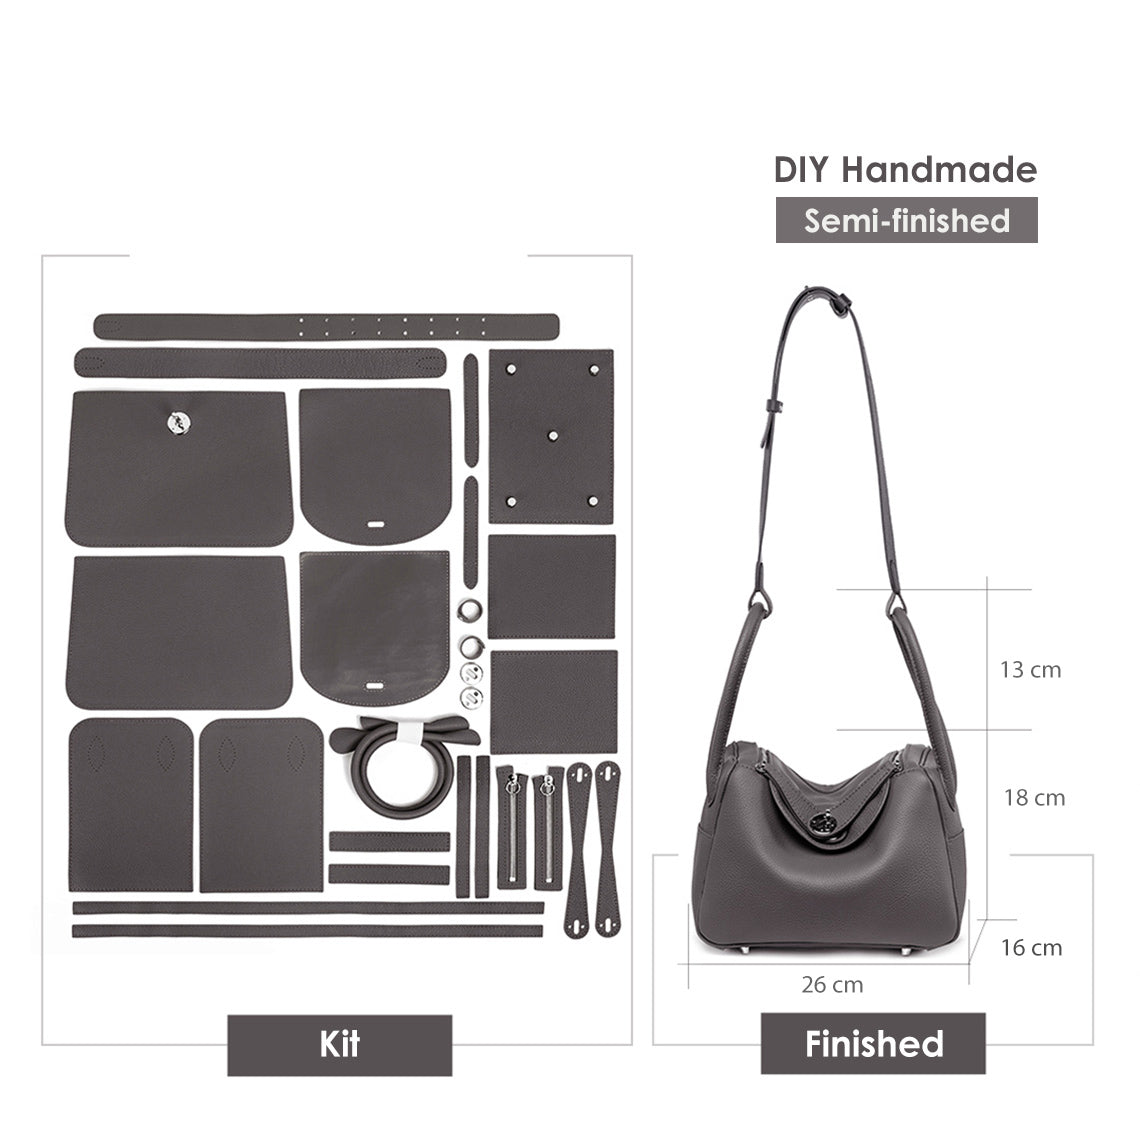 POPSEWING™ Top Grain Leather Lindy Bag DIY Kit | Handmade Lindy Bag